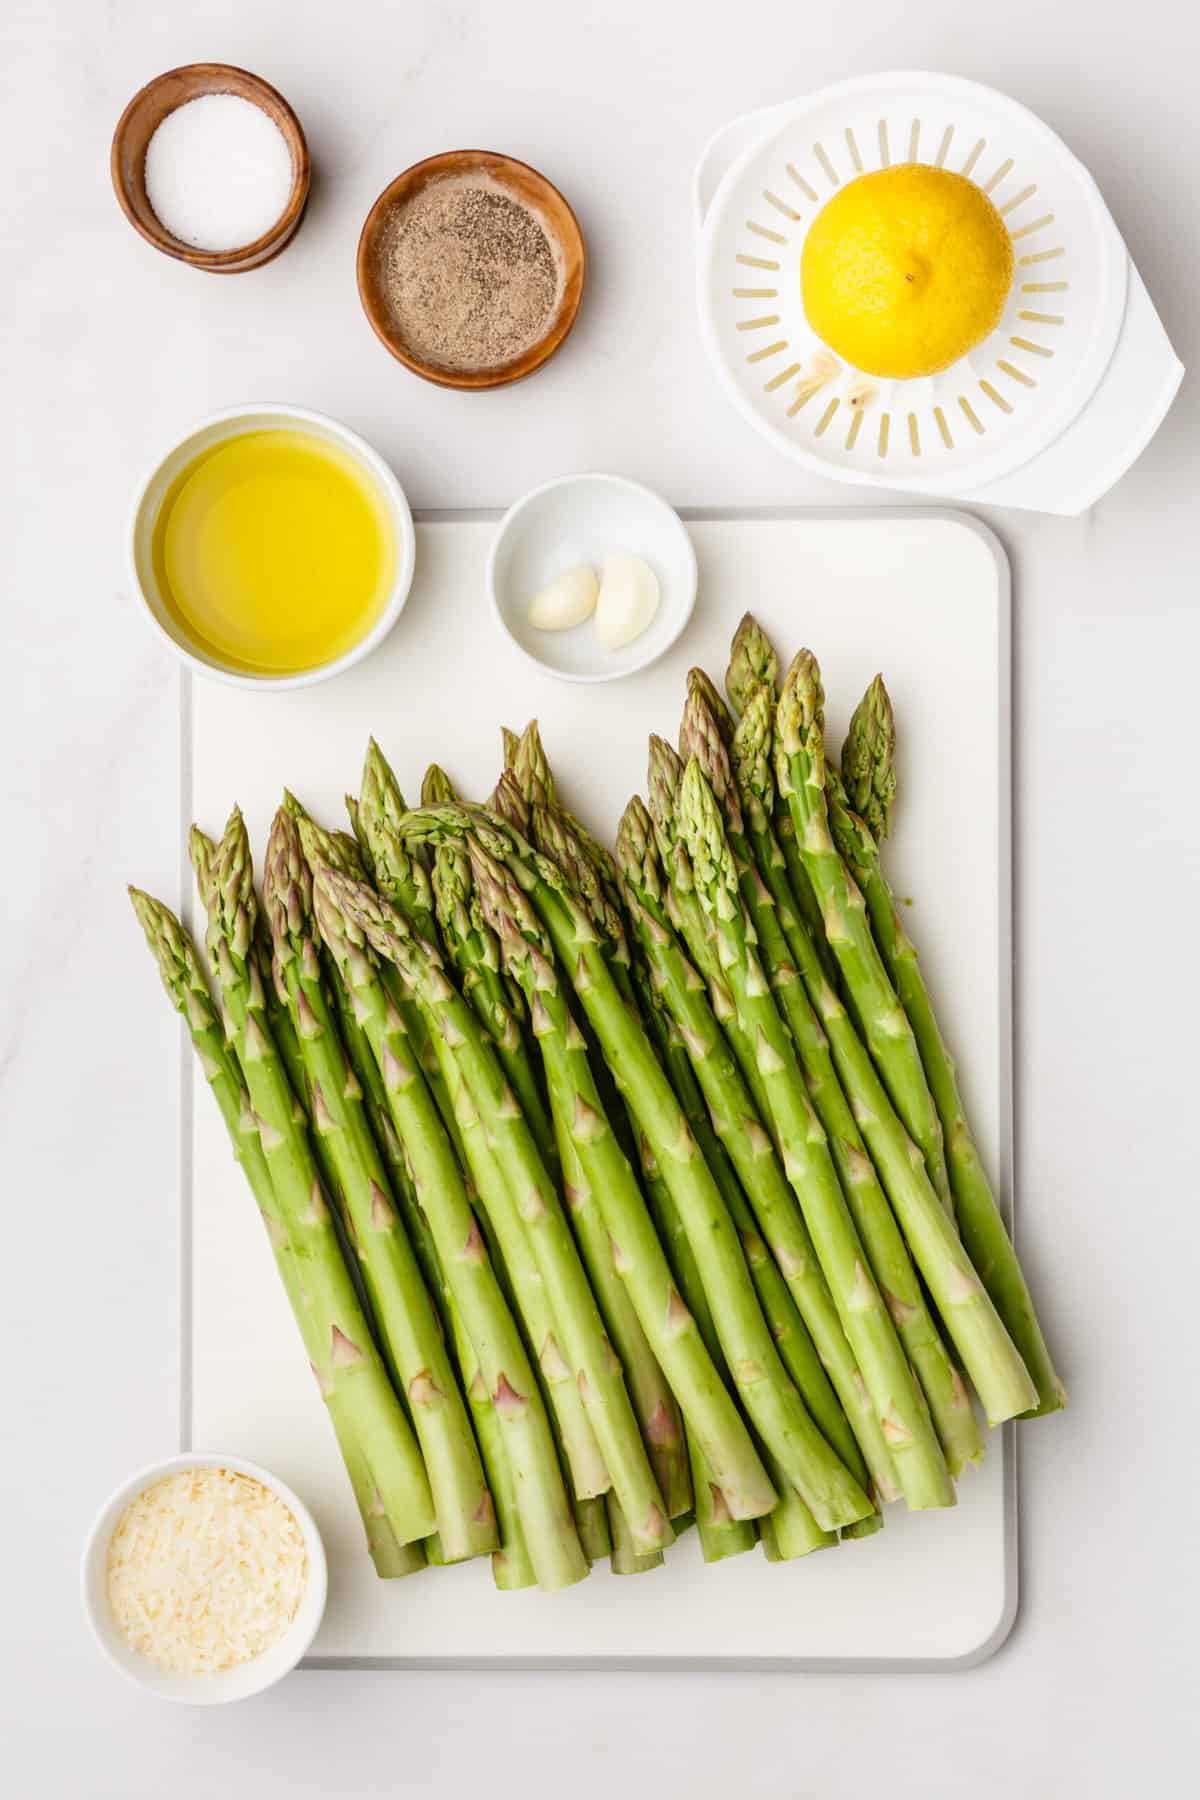 ingredients to make roasted asparagus